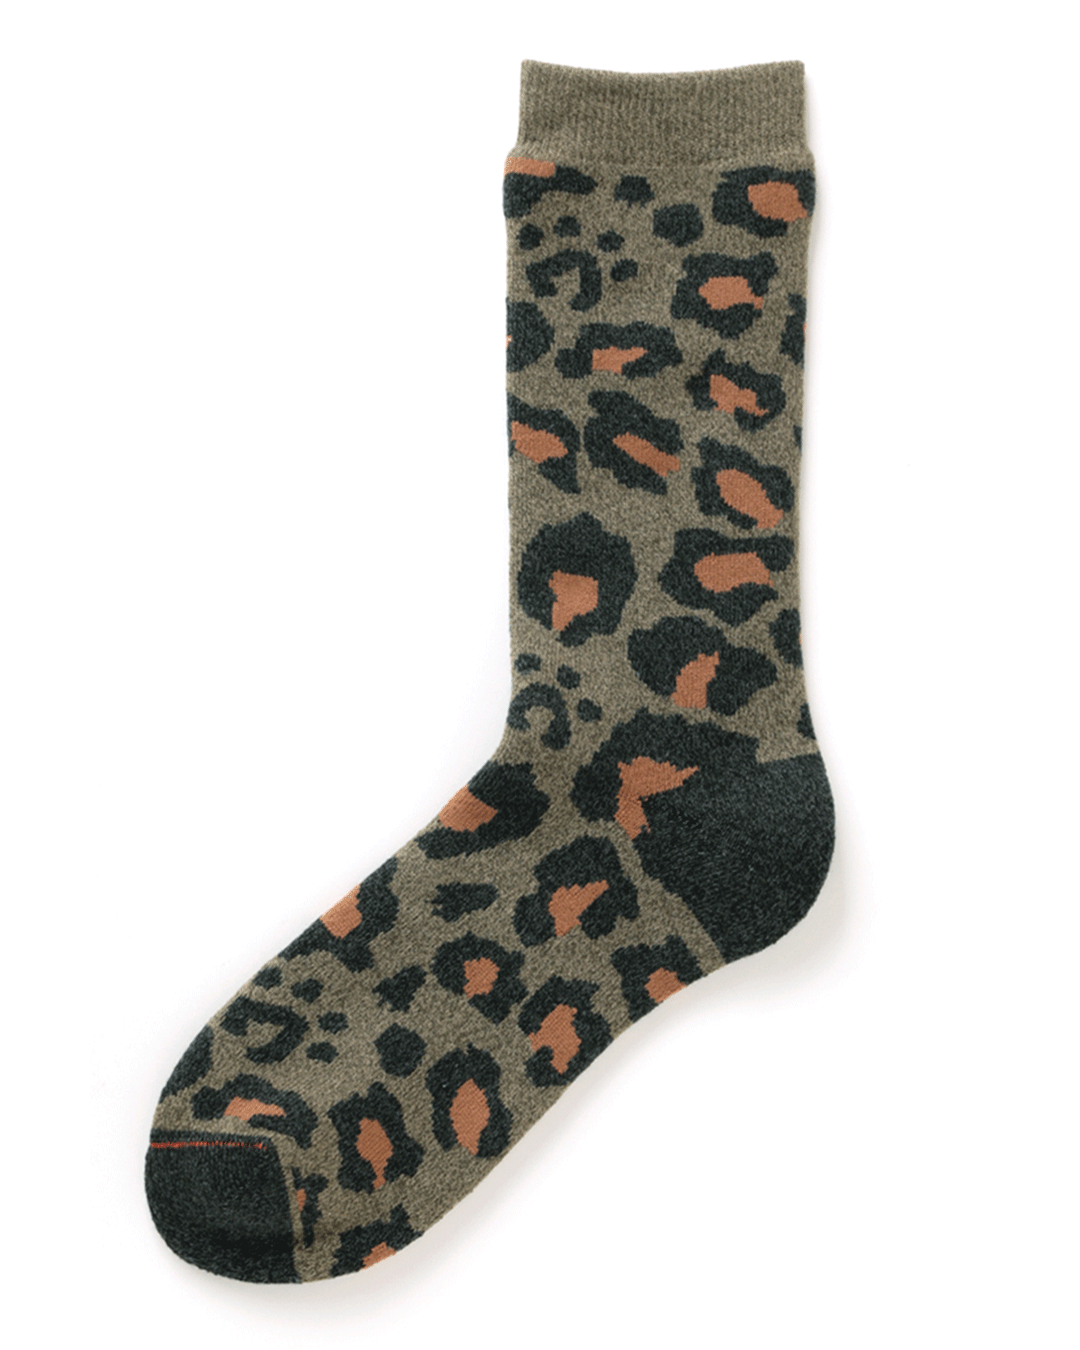 Pile Leopard Crew Socks